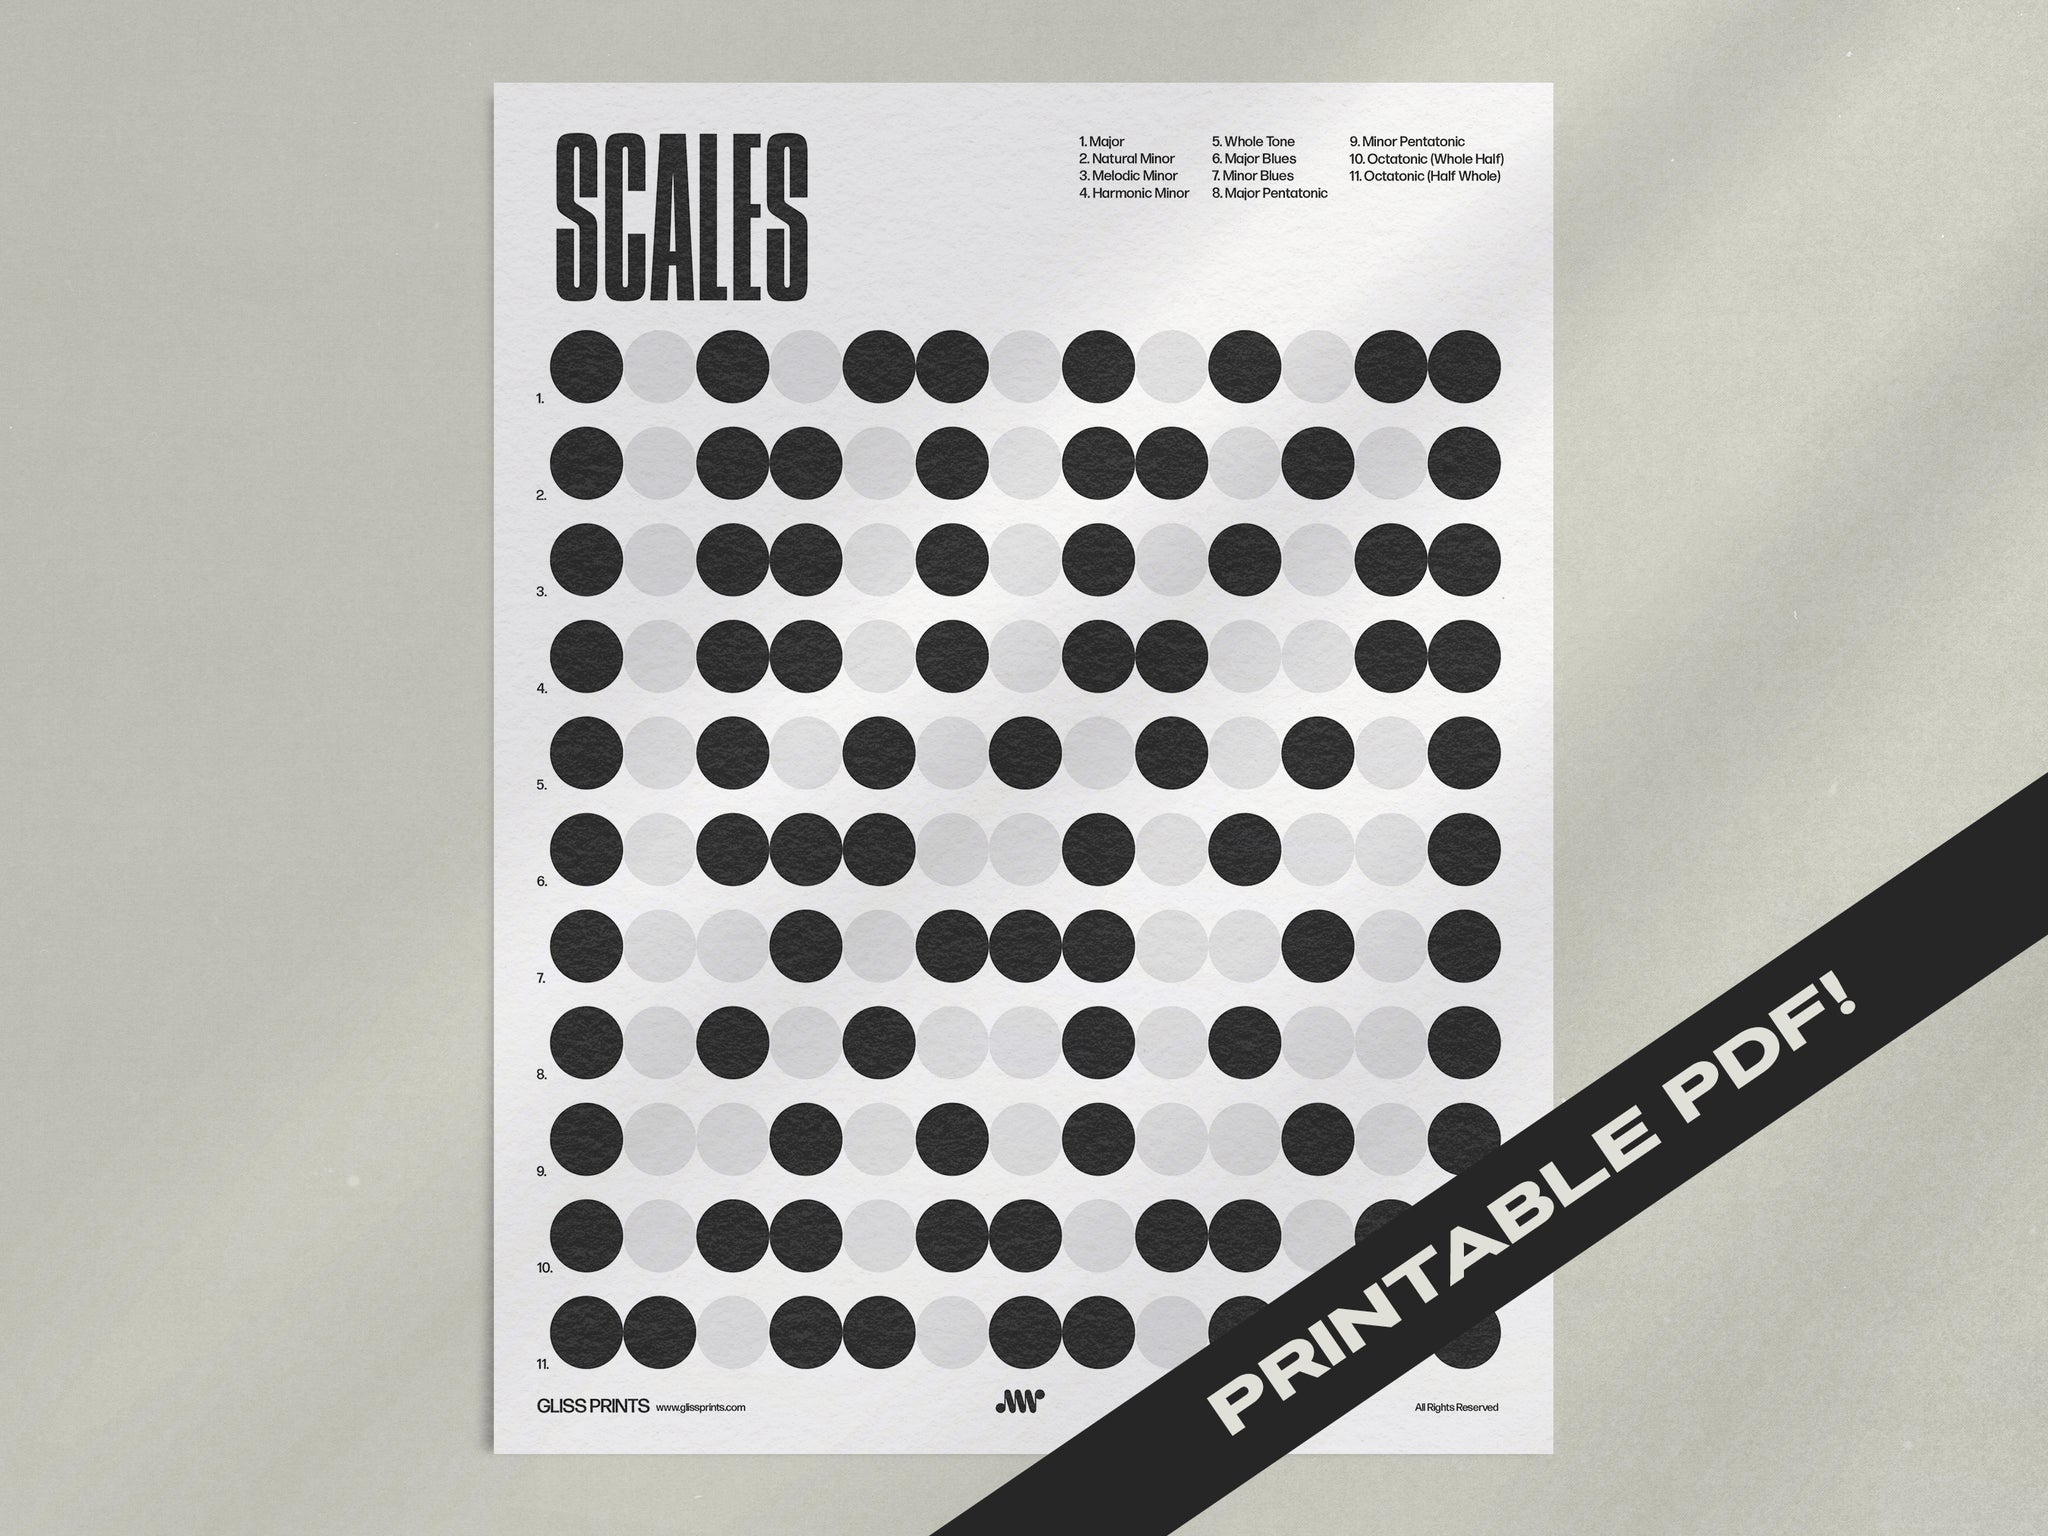 Music Scales Chart PDF, Dot Design, Printable Digital Download